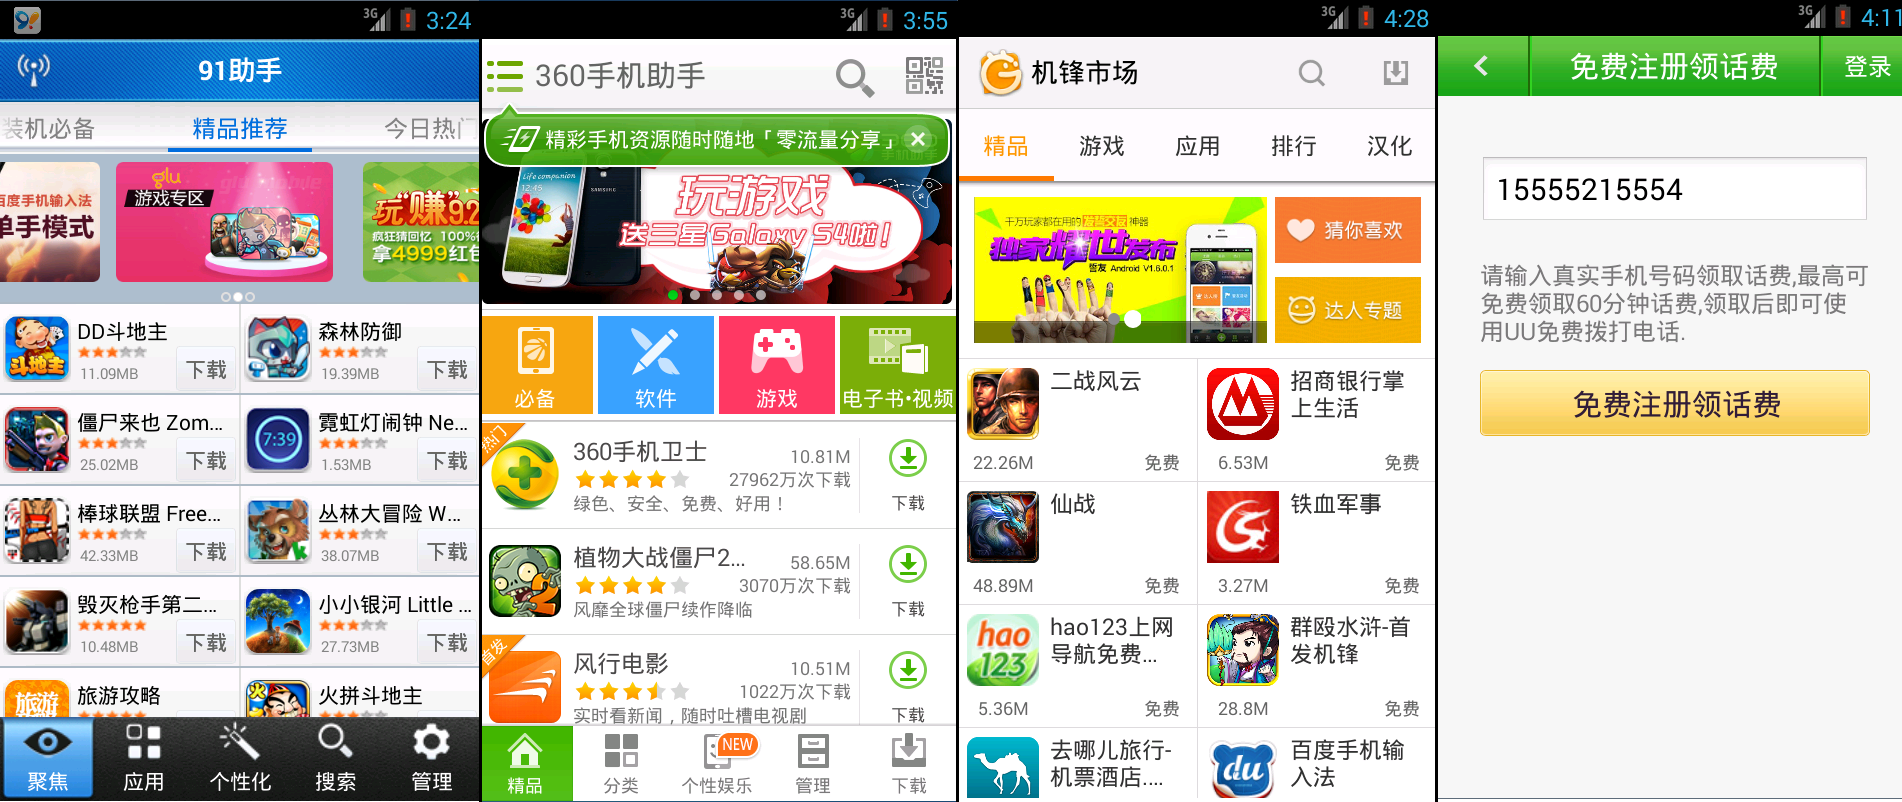 Приложение на китайские андроид часы. Trainchinese приложение.